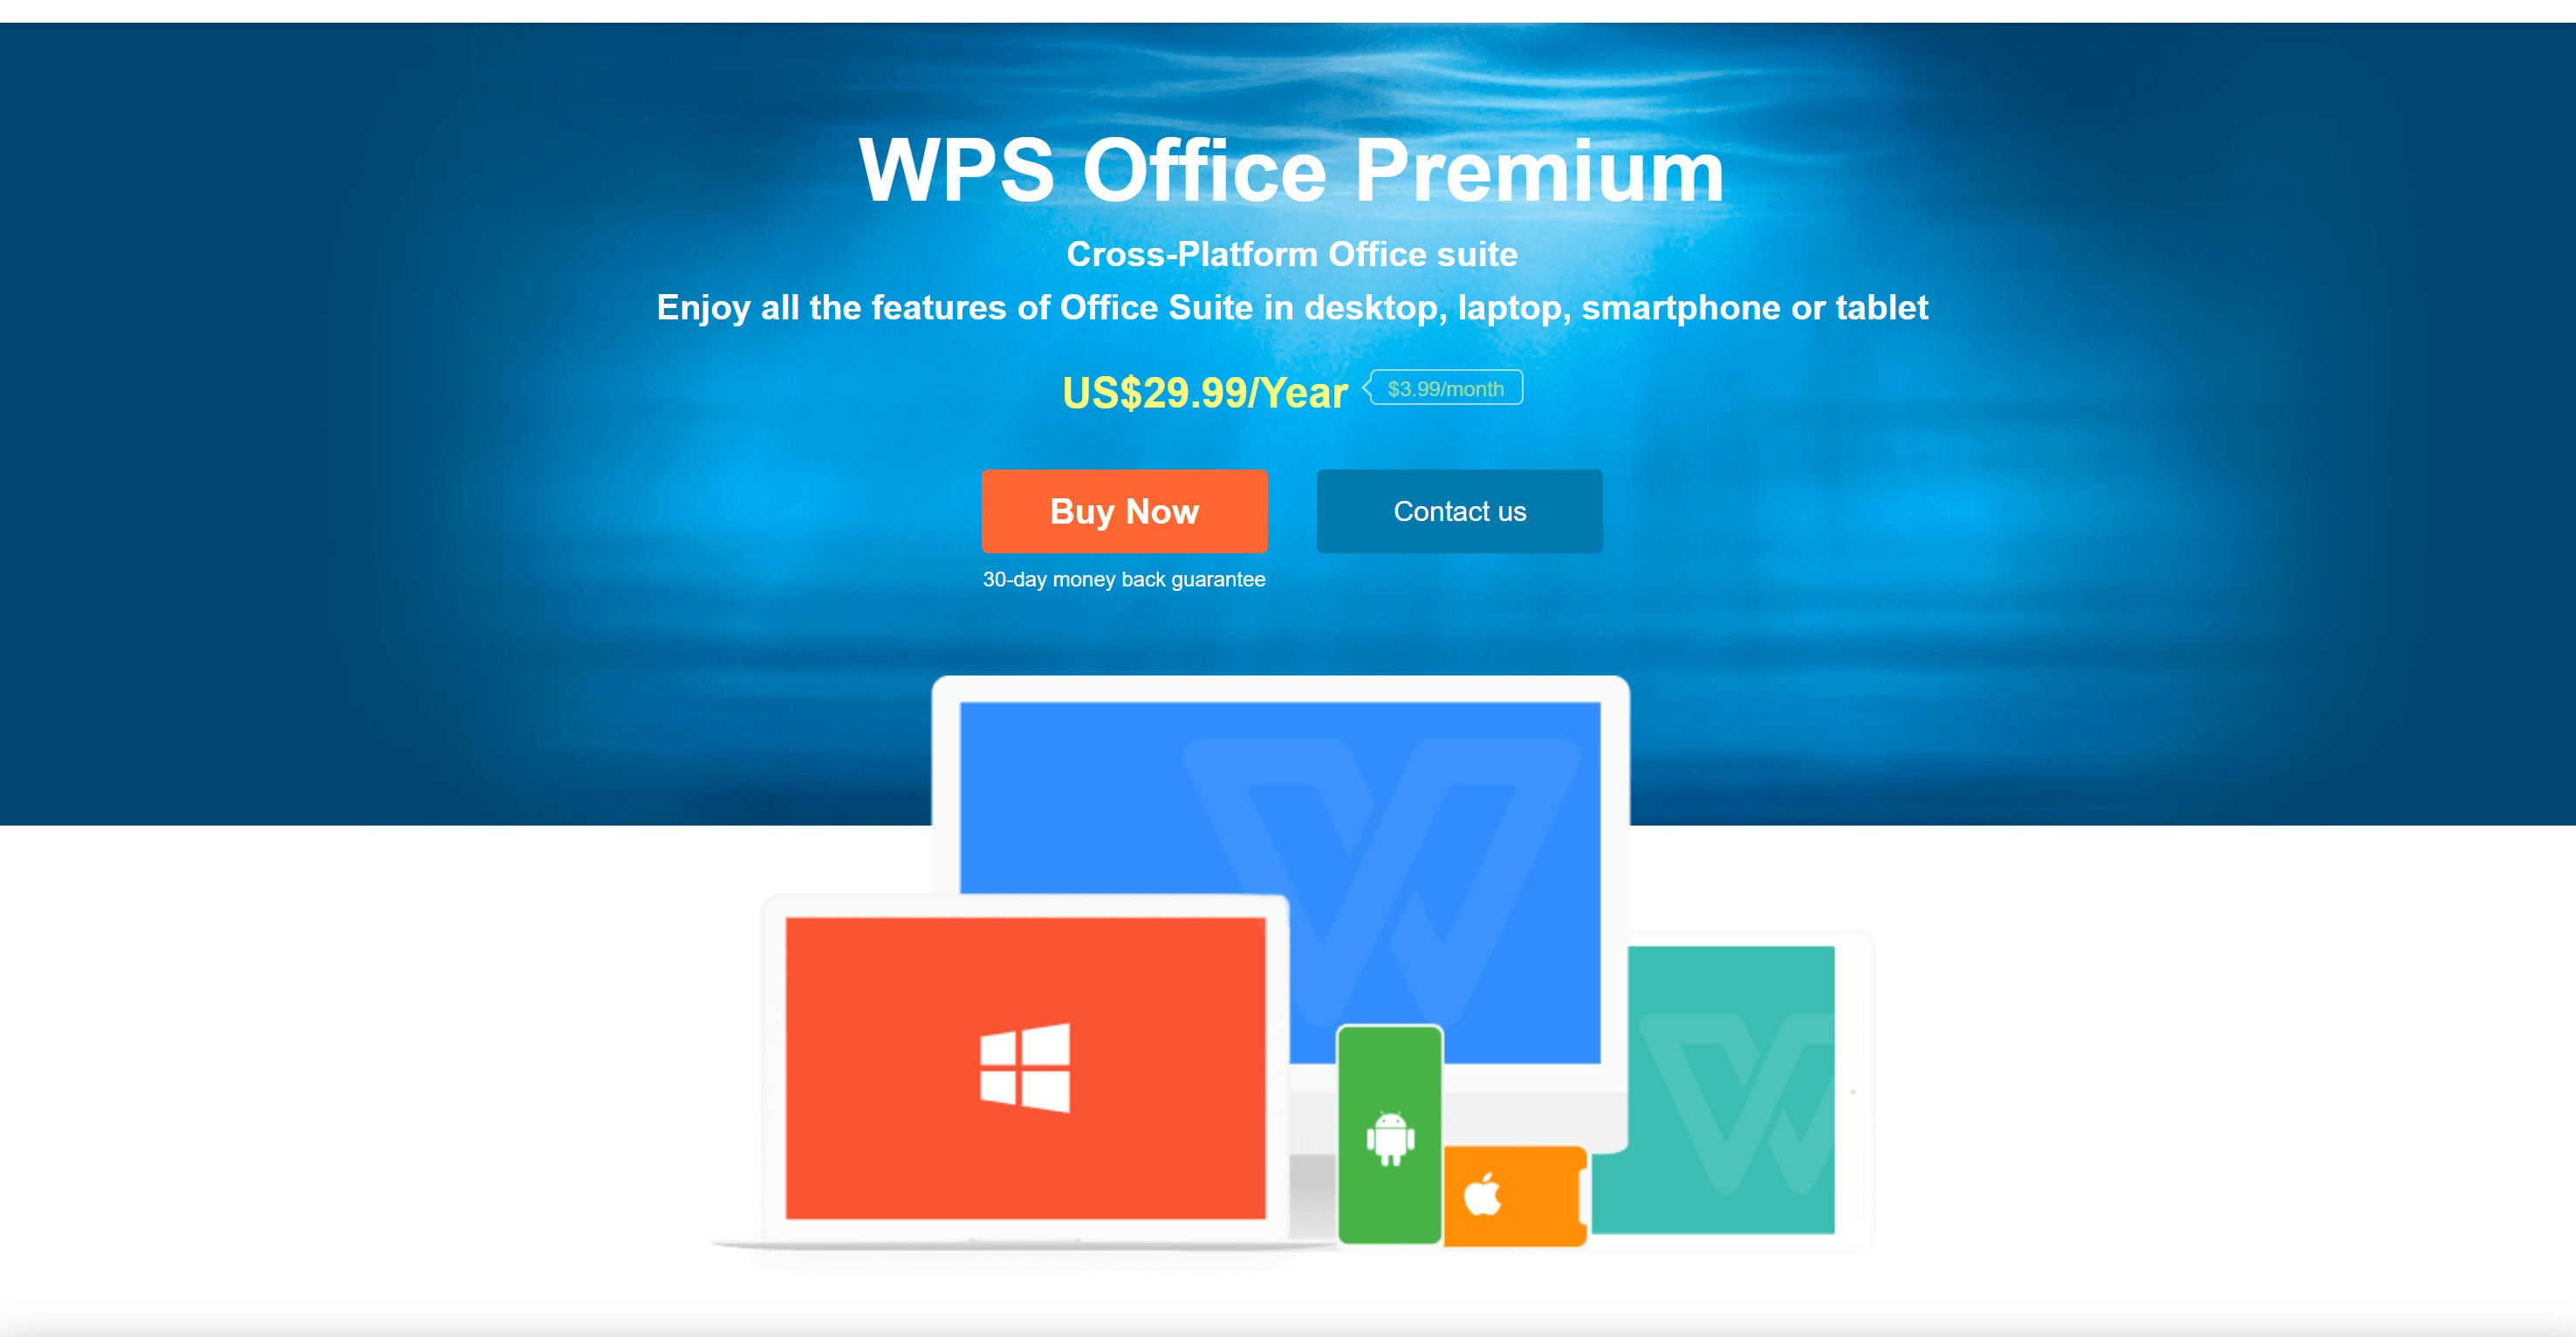 WPS office premium price